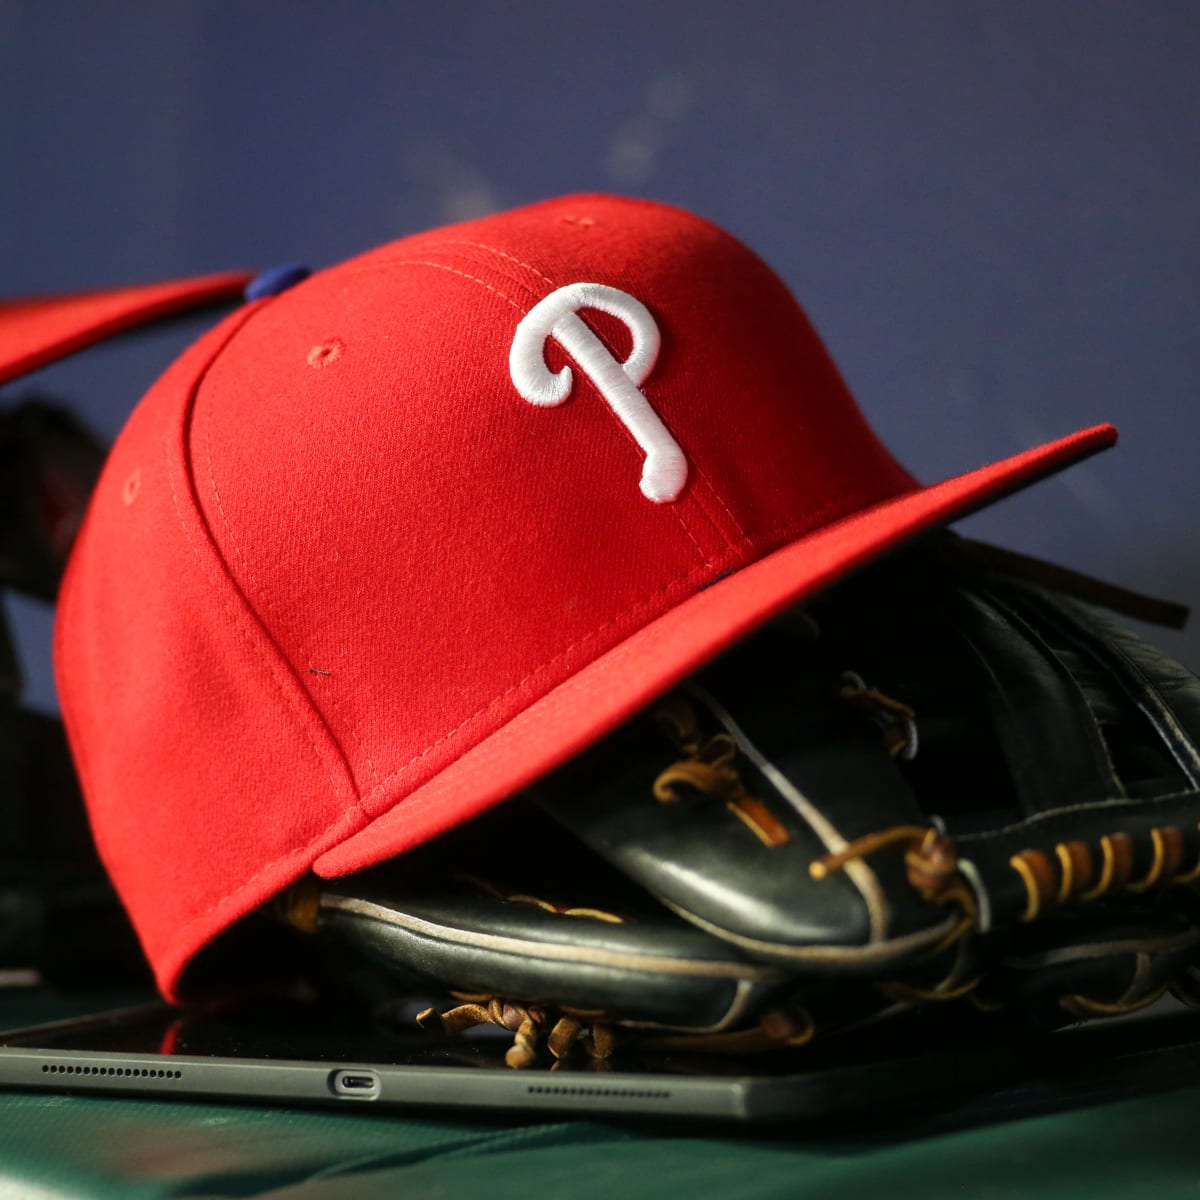 Phillies Hats